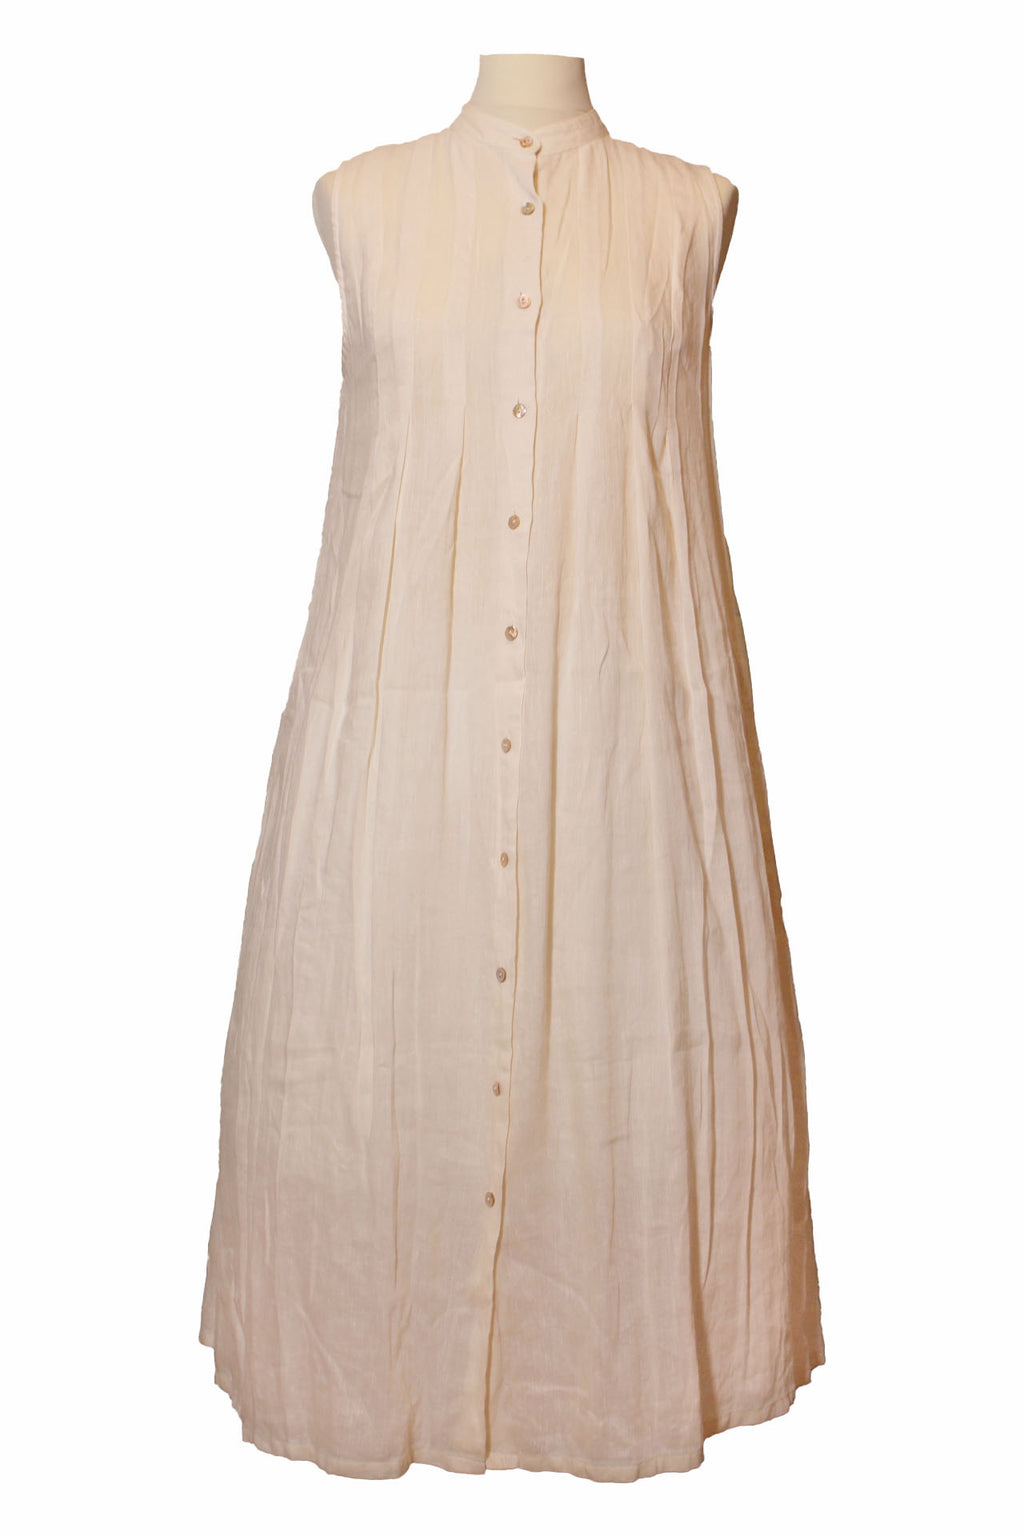 Cream cotton & linen coat dress